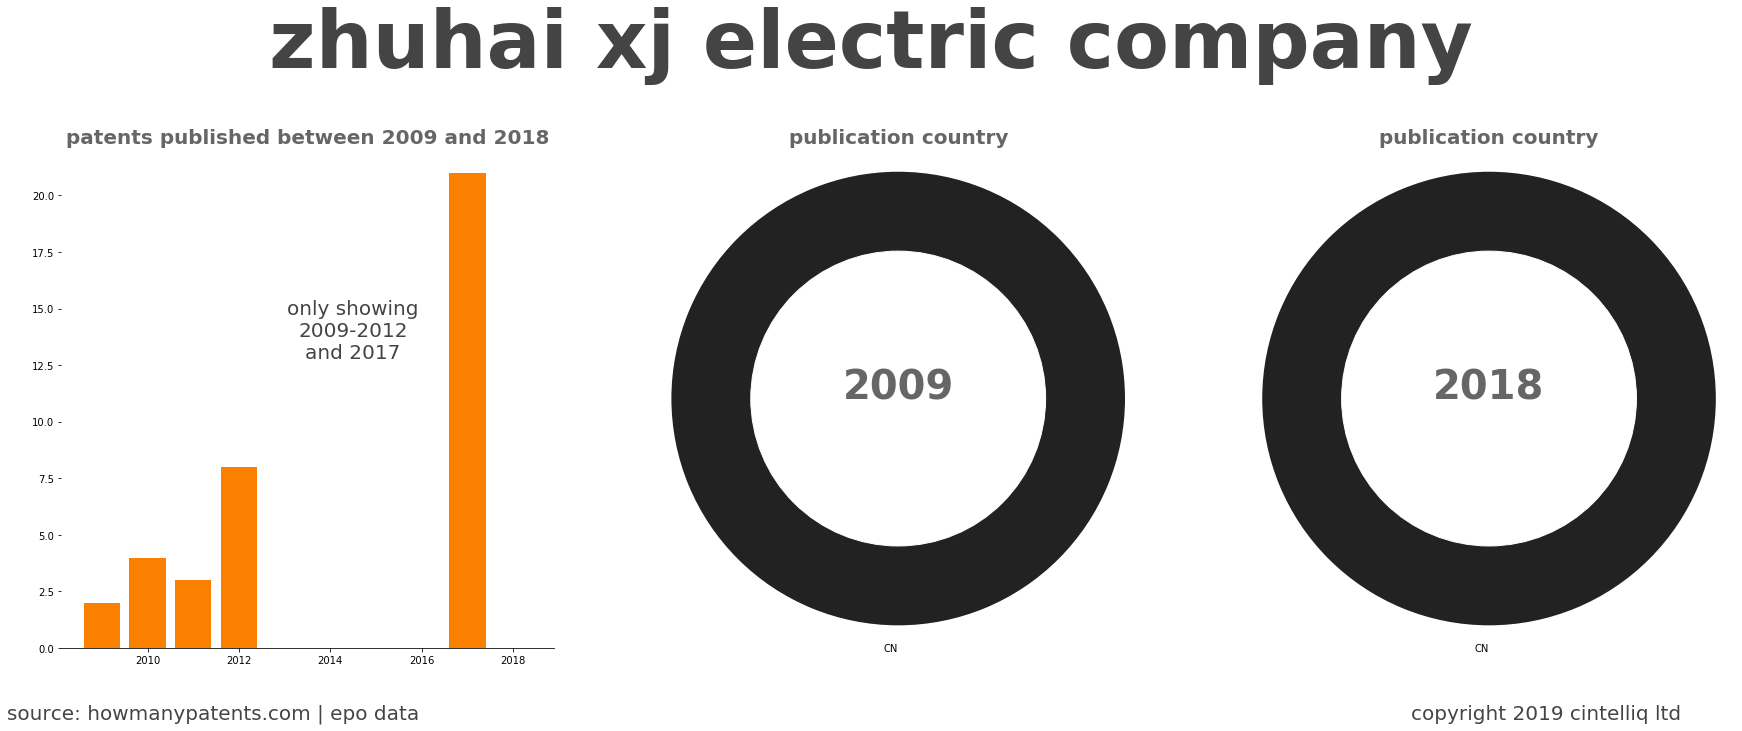 summary of patents for Zhuhai Xj Electric Company